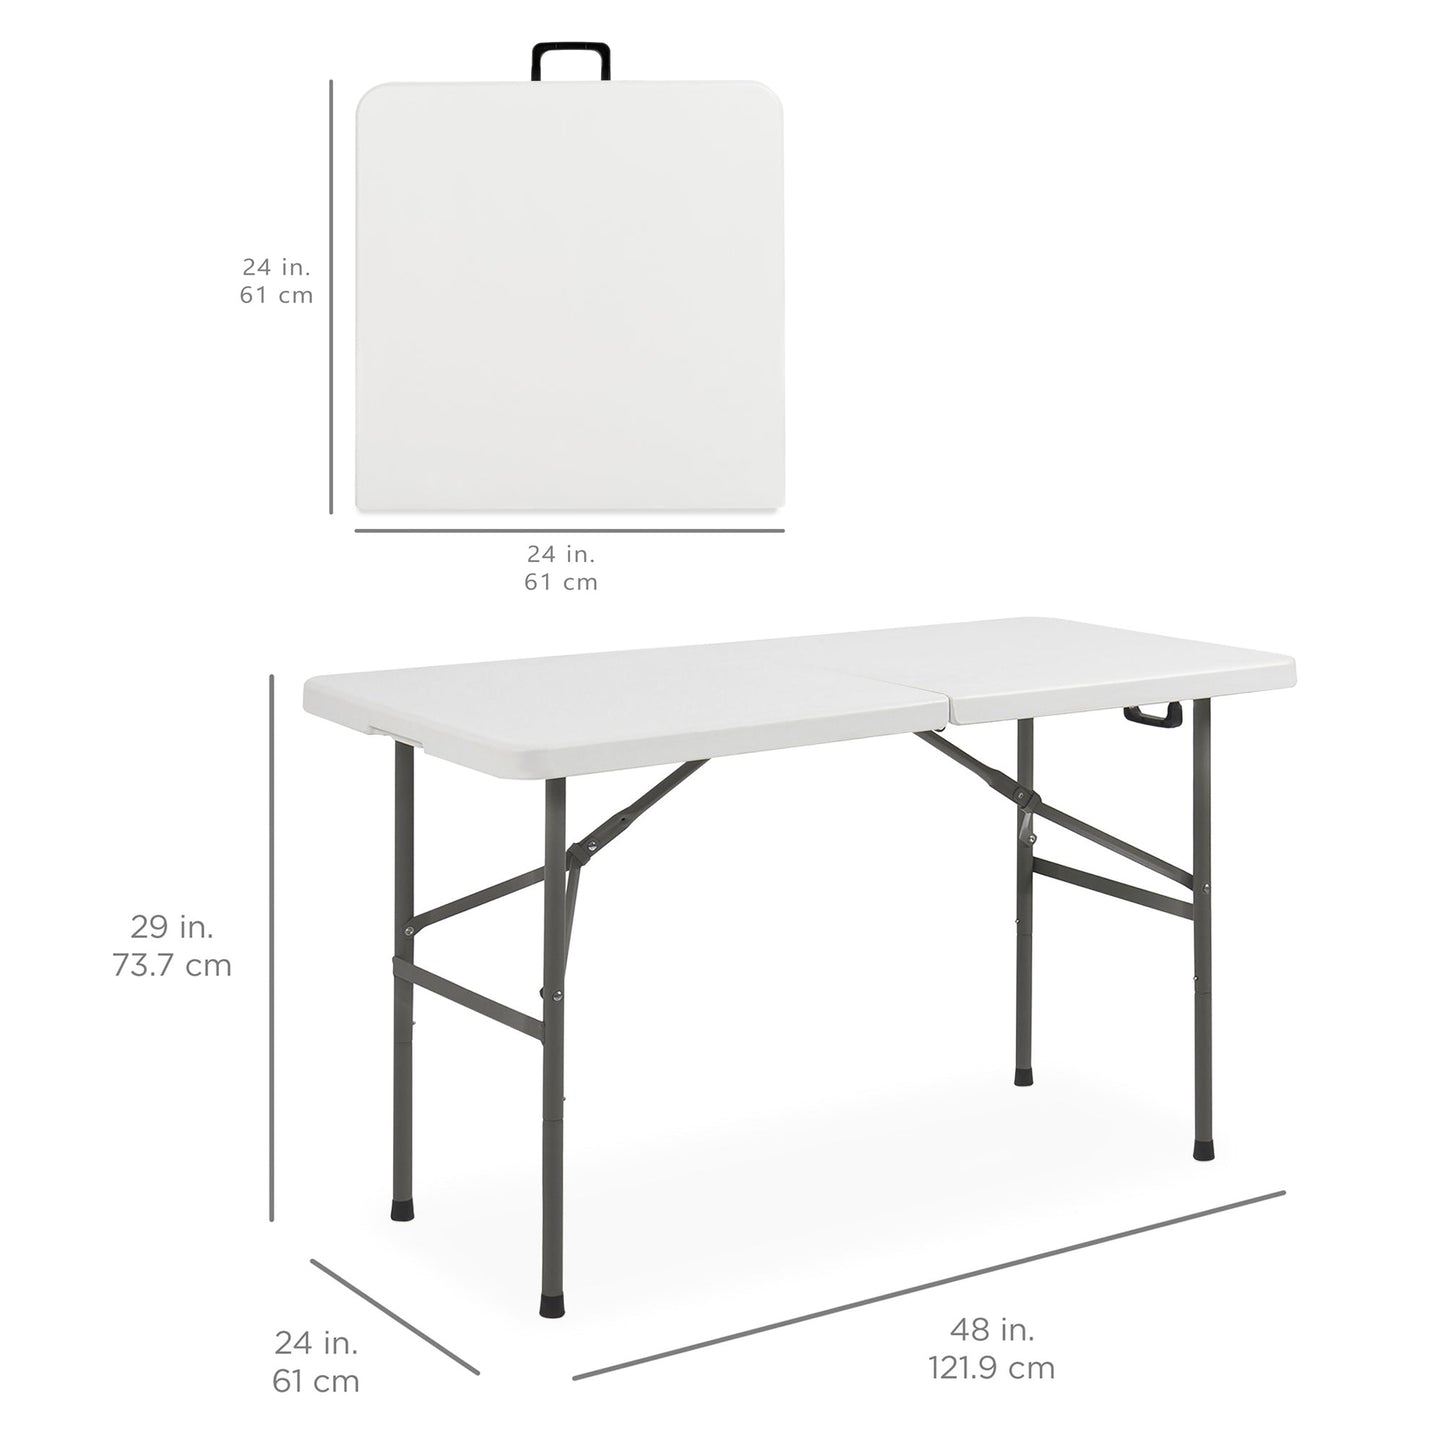 Portable Folding Plastic Dining Table w/ Handle, Lock - 4ft